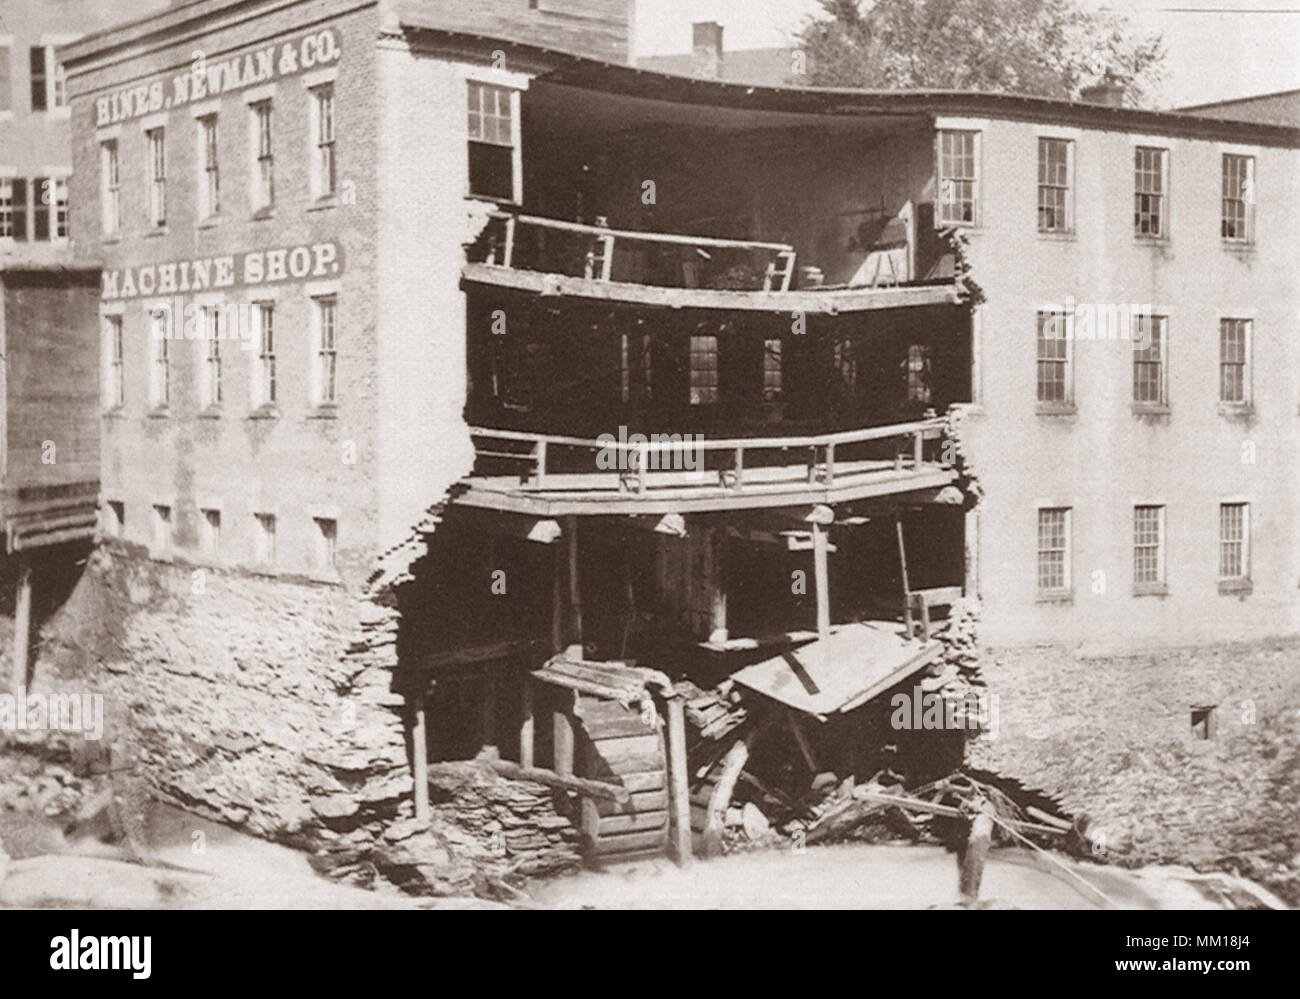 Machine Shop Damaged from Flood. Brattleboro. 1869 Stock Photo